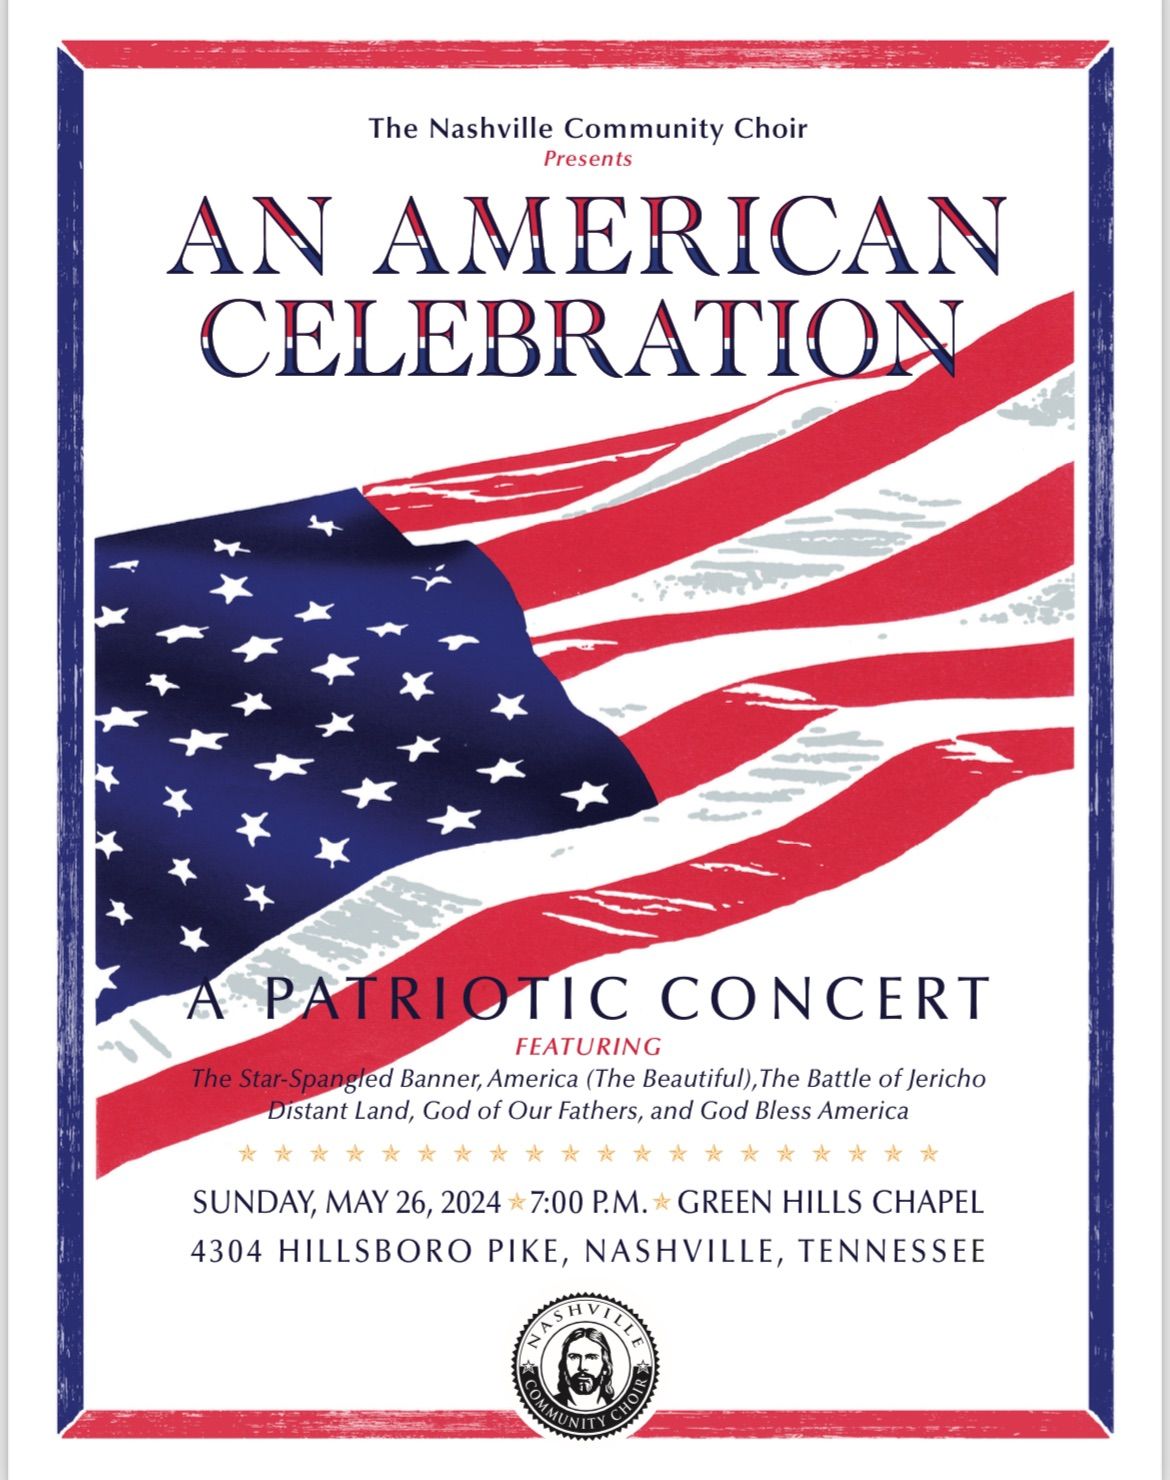 An America Celebration - Free Concert of Patriotic Music